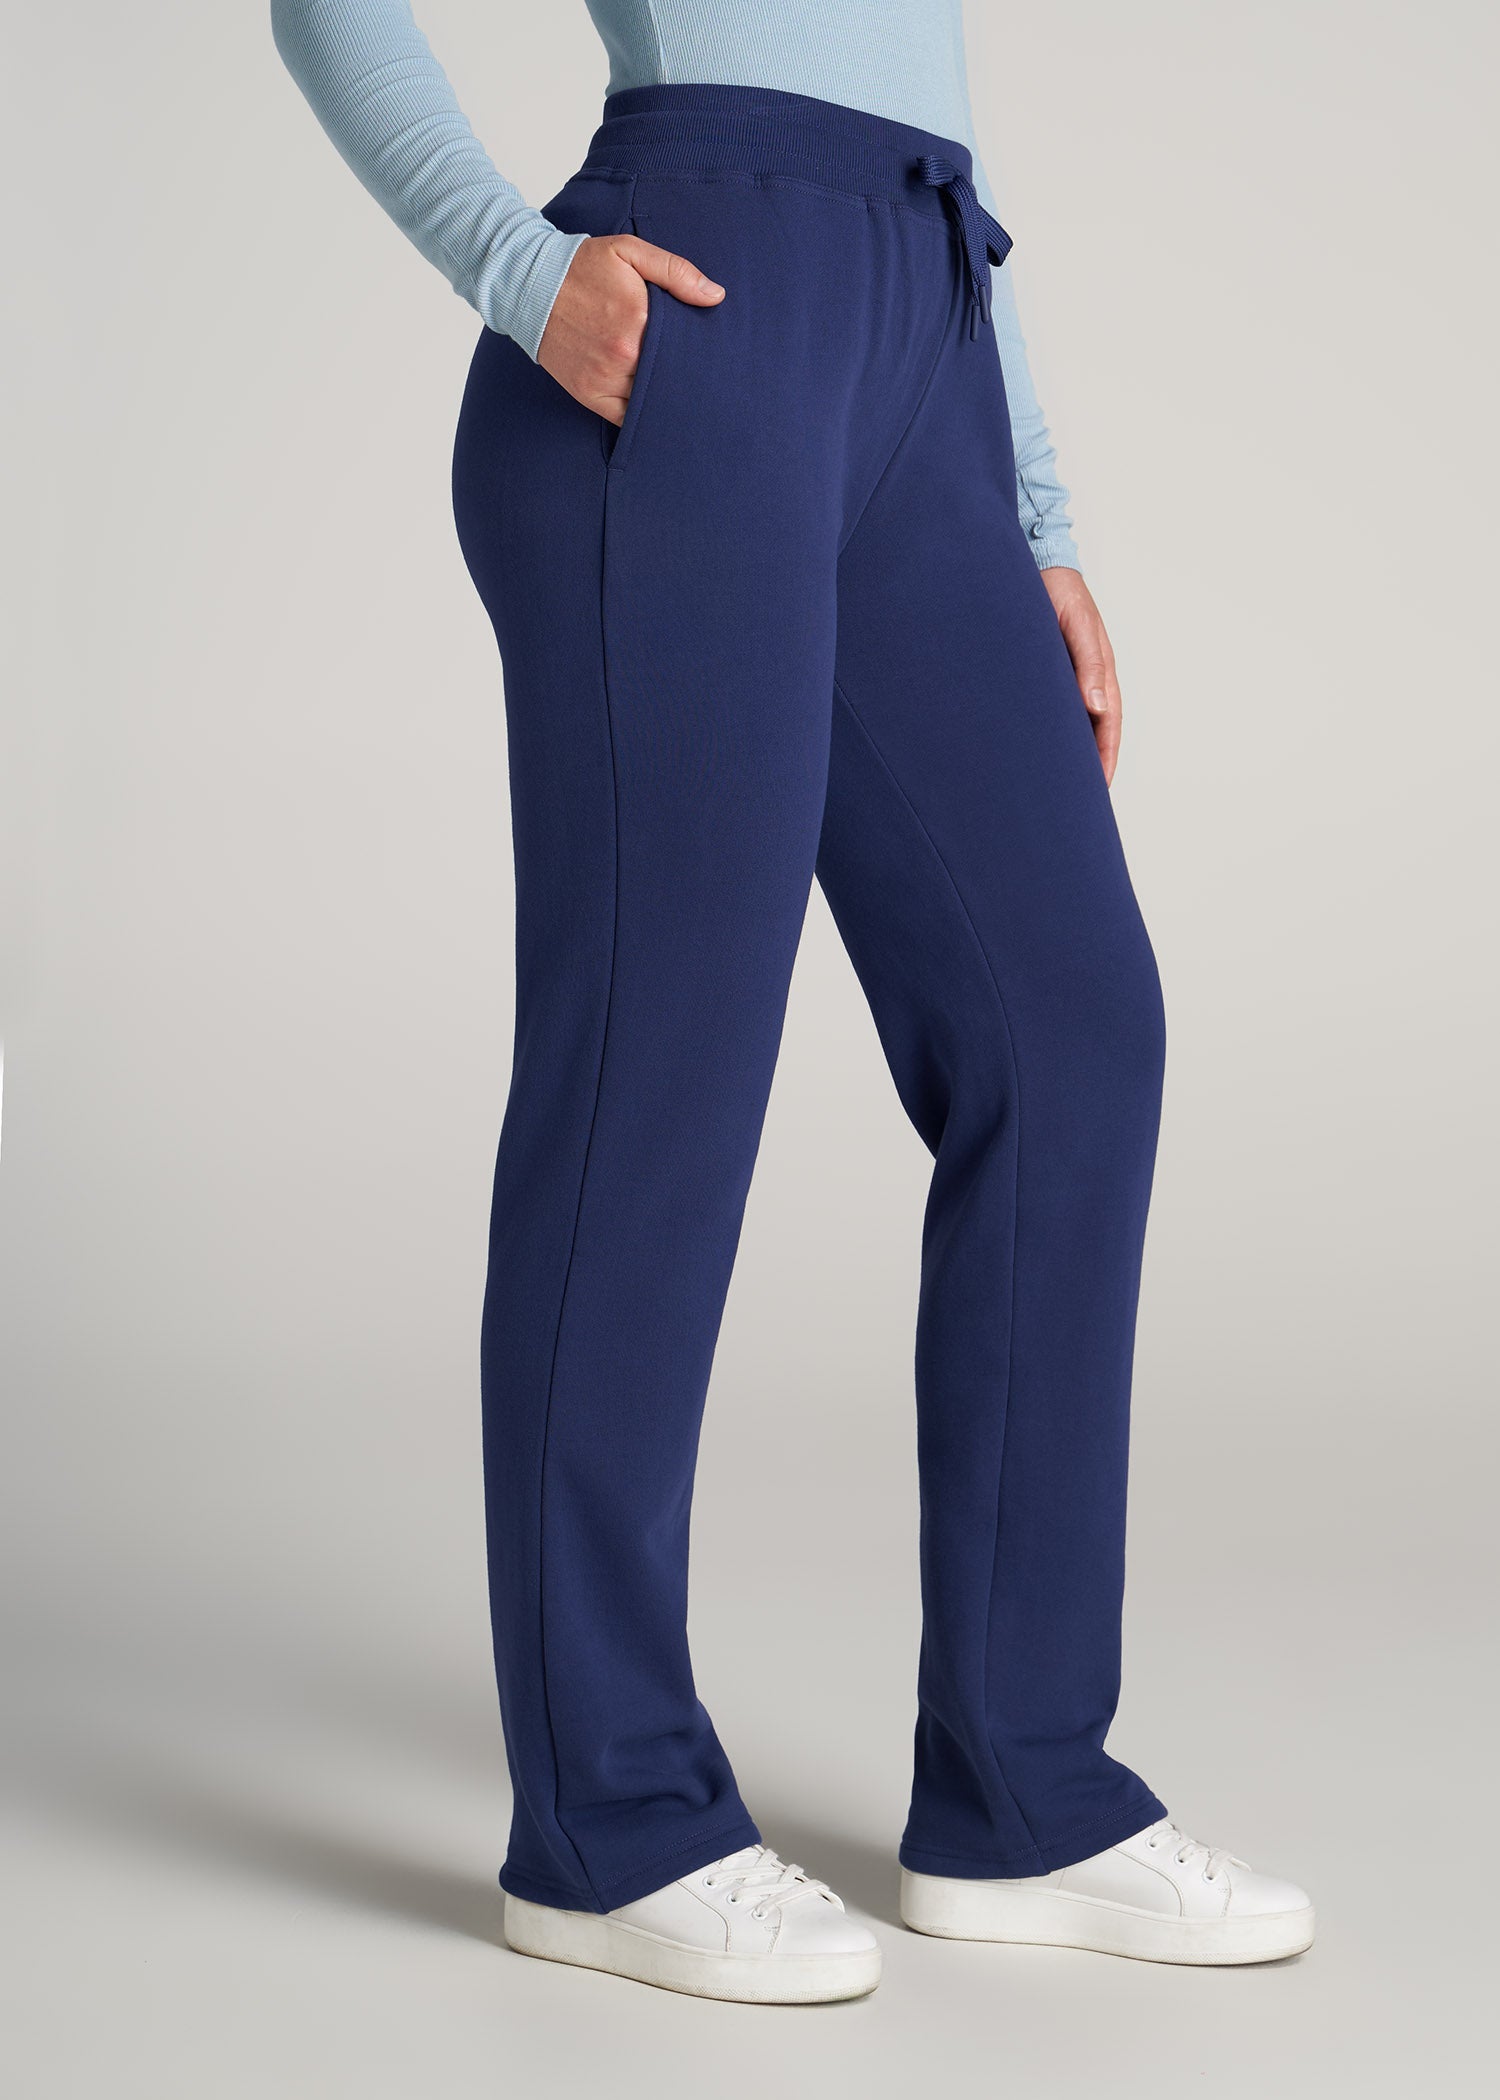         American-Tall-Women-WKND-Fleece-Open-Bottom-Pant-Midnight-Blue-side